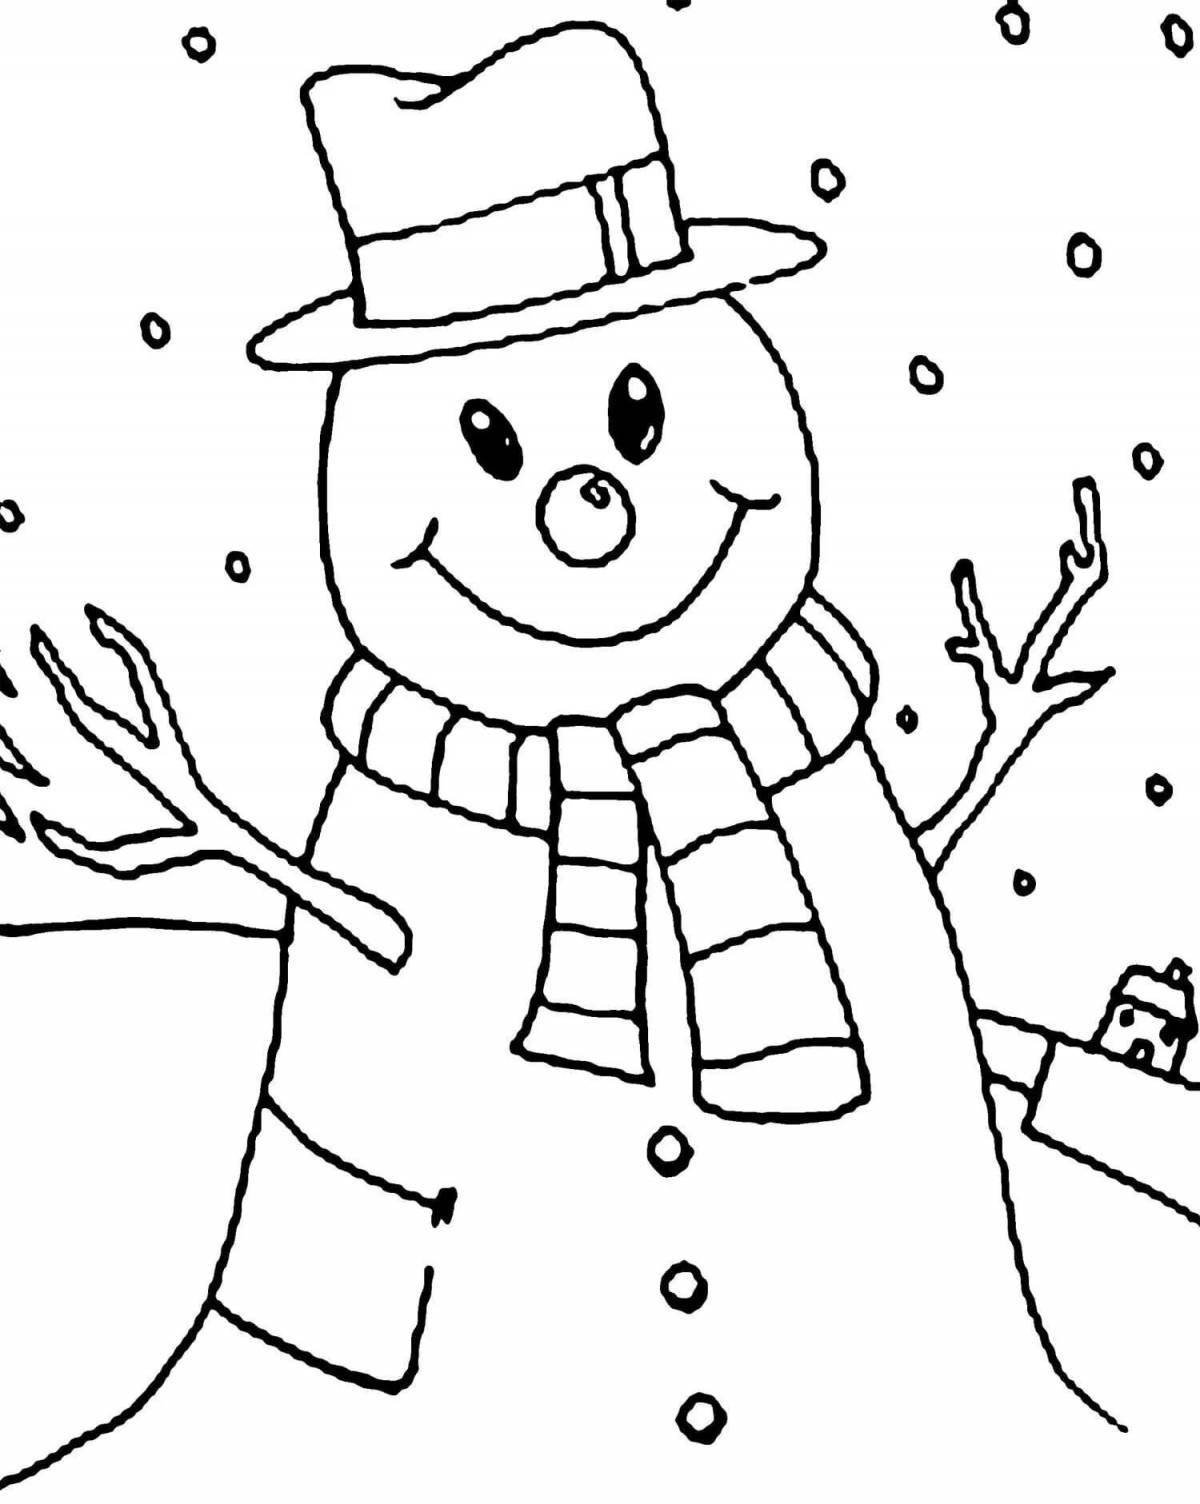 Playful snowman coloring